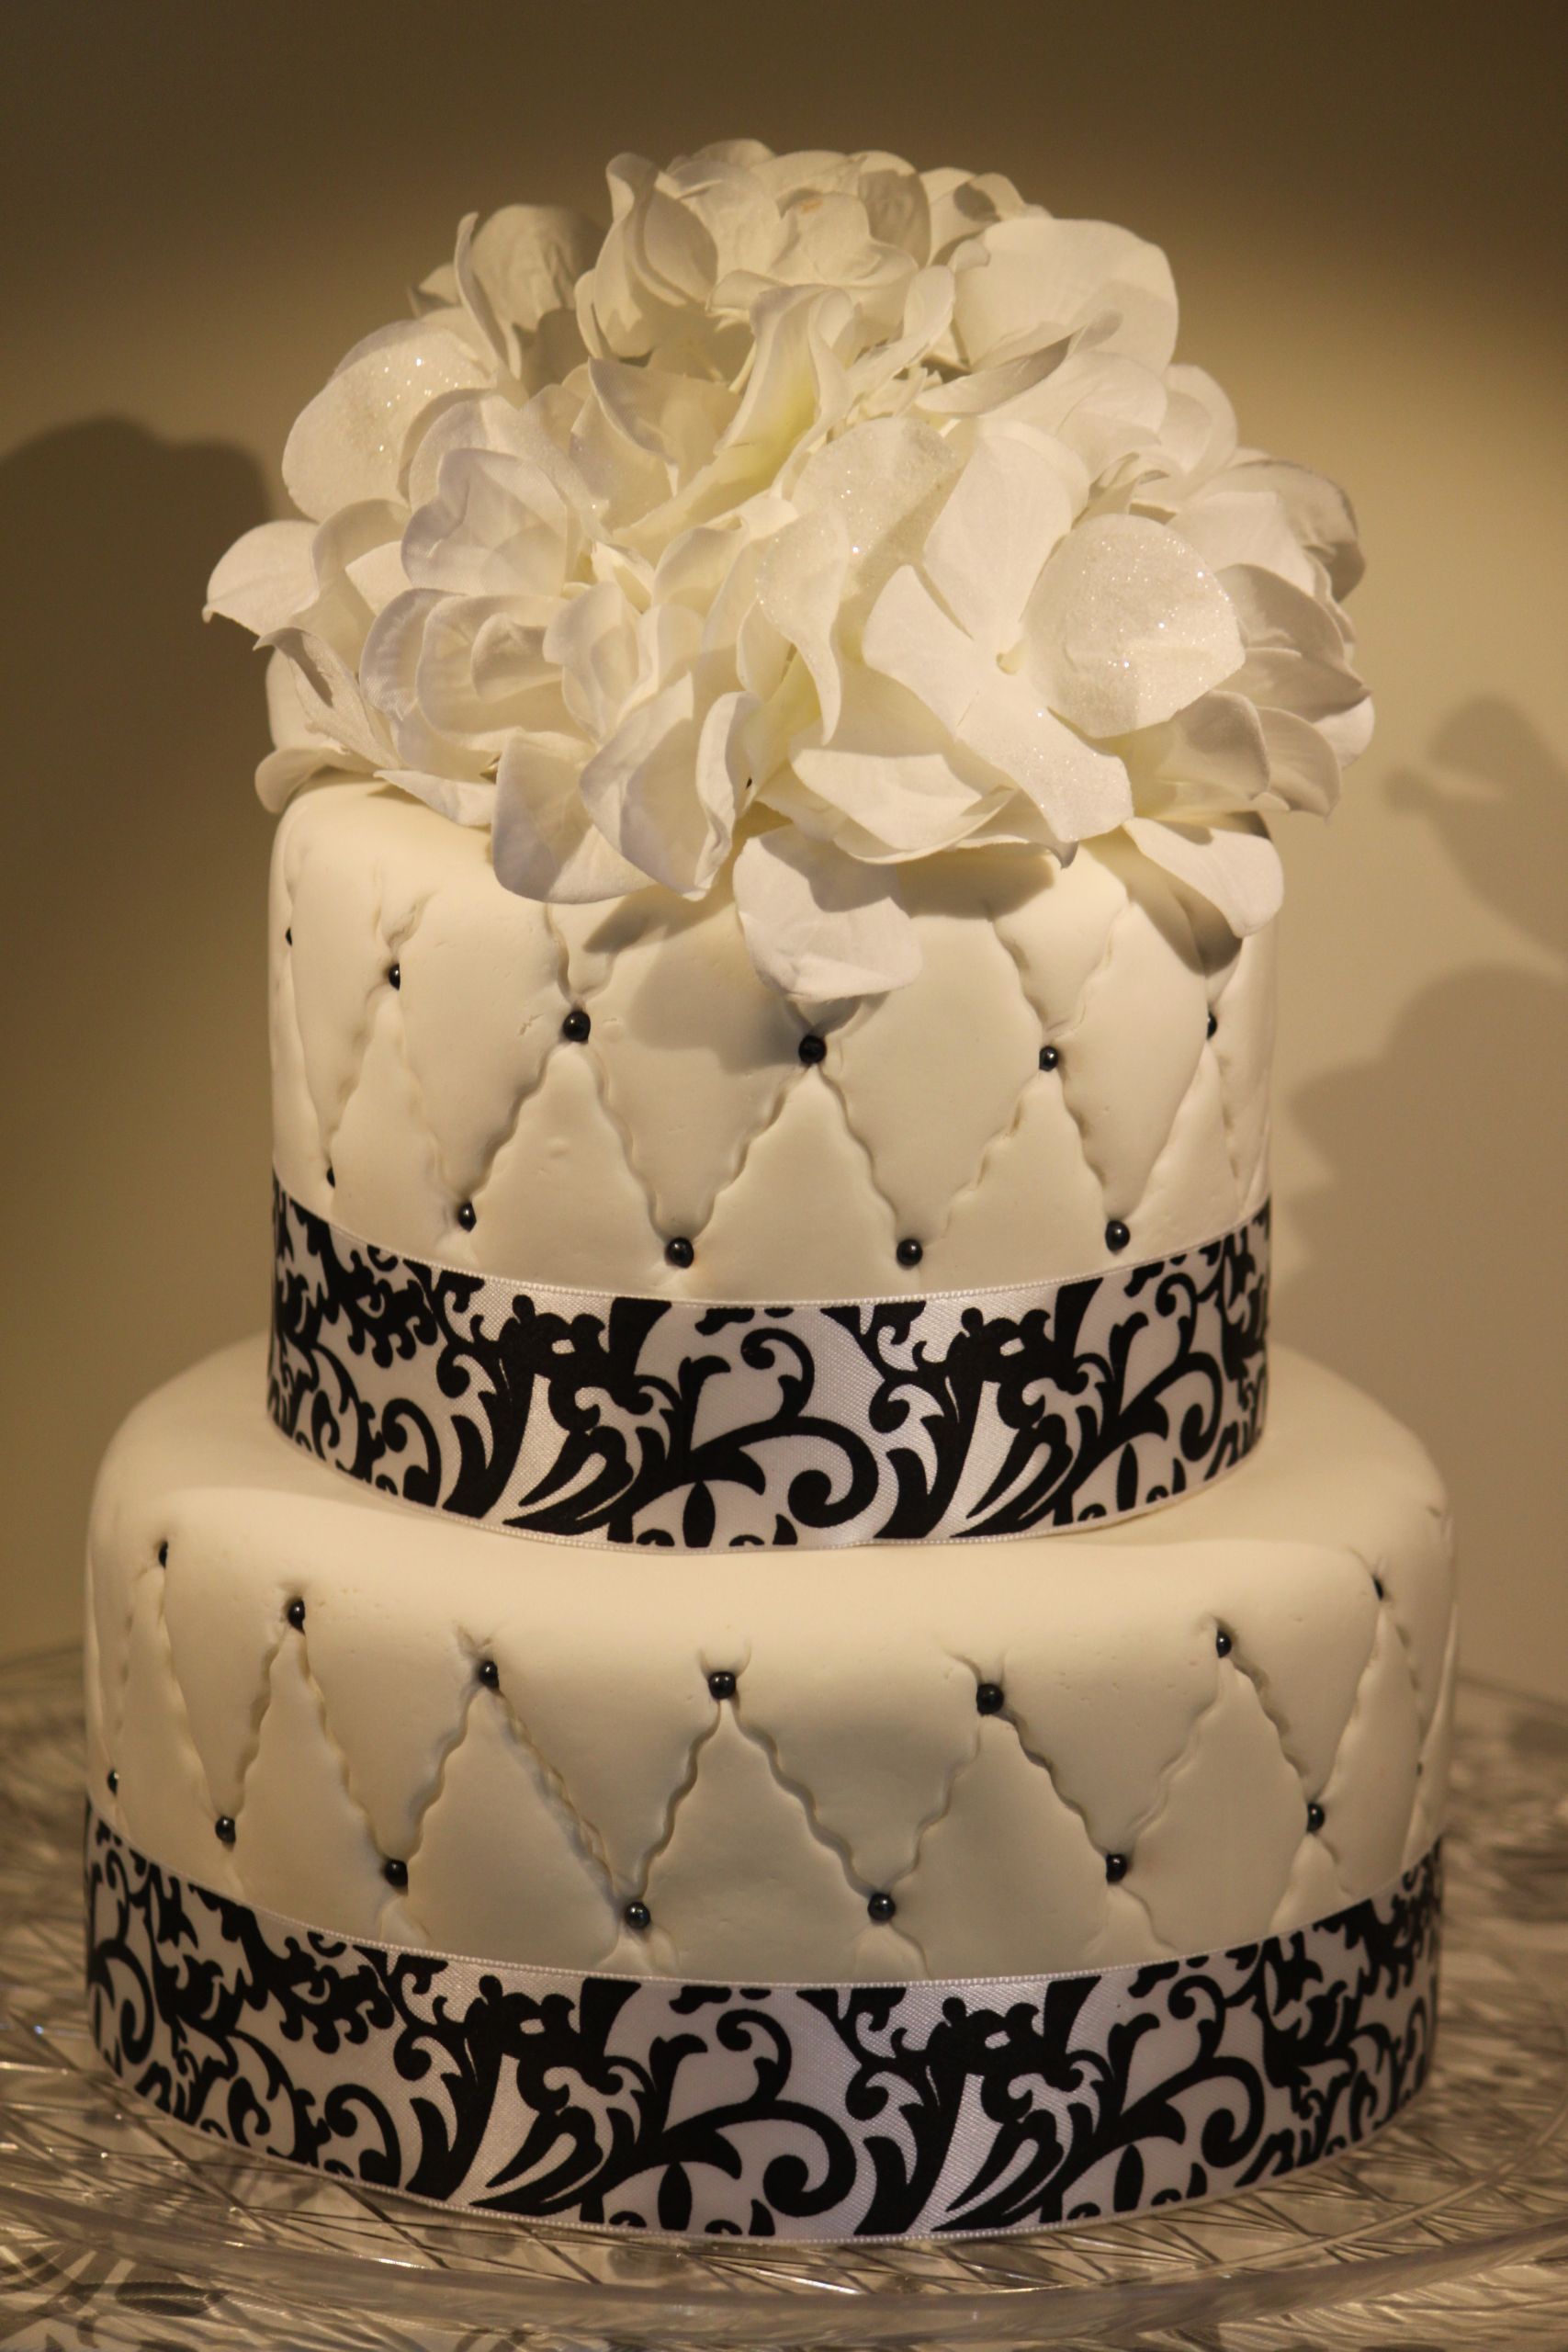 Black And White Birthday Cake
 Black and White Quilted Fondant Birthday Cake